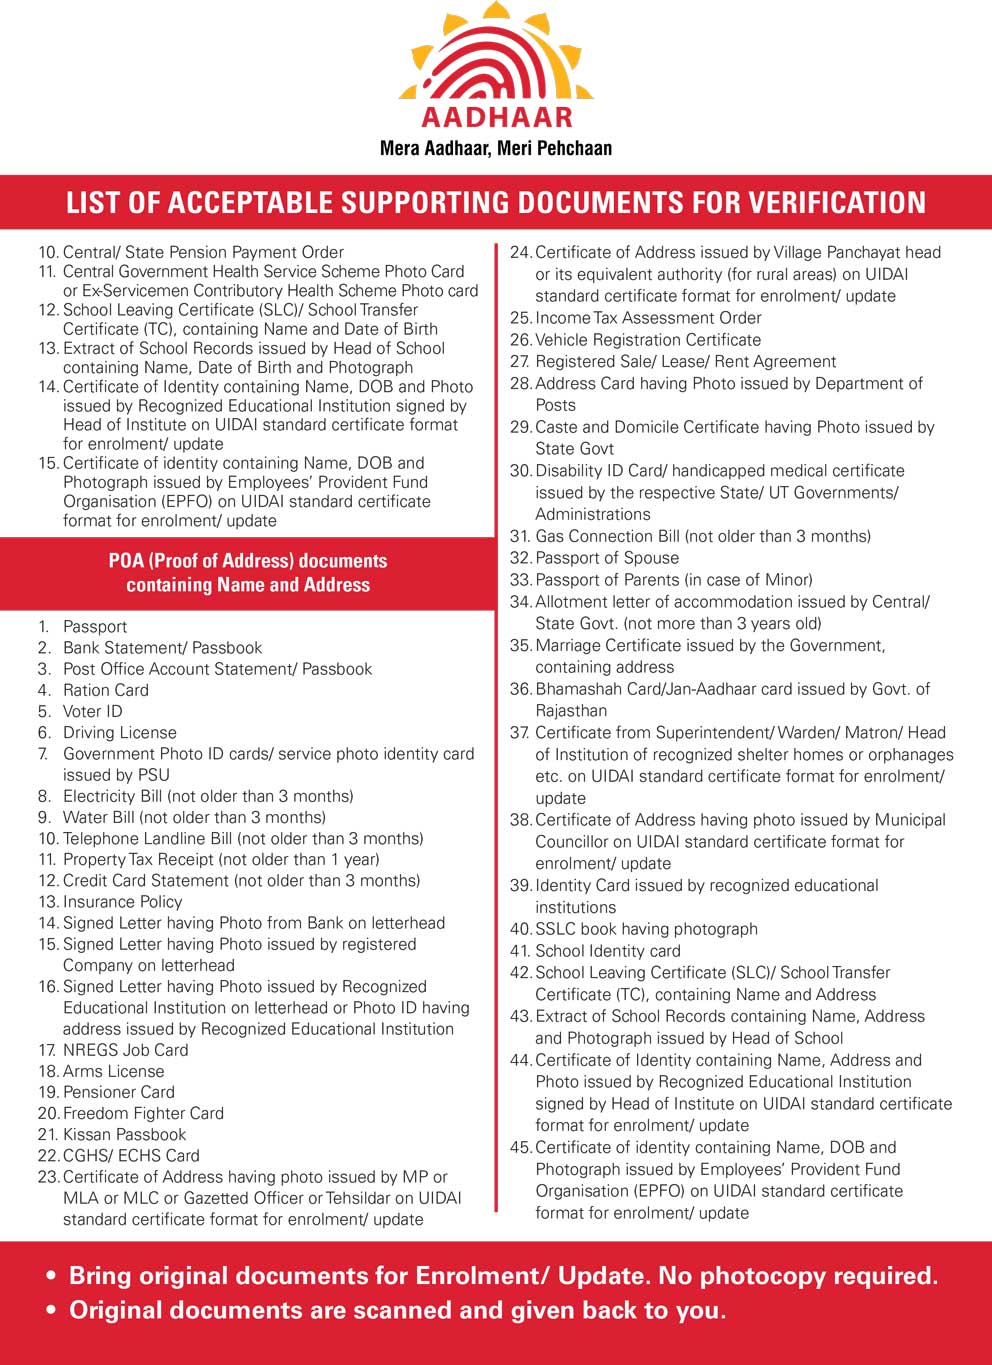 second aadhaar documents list